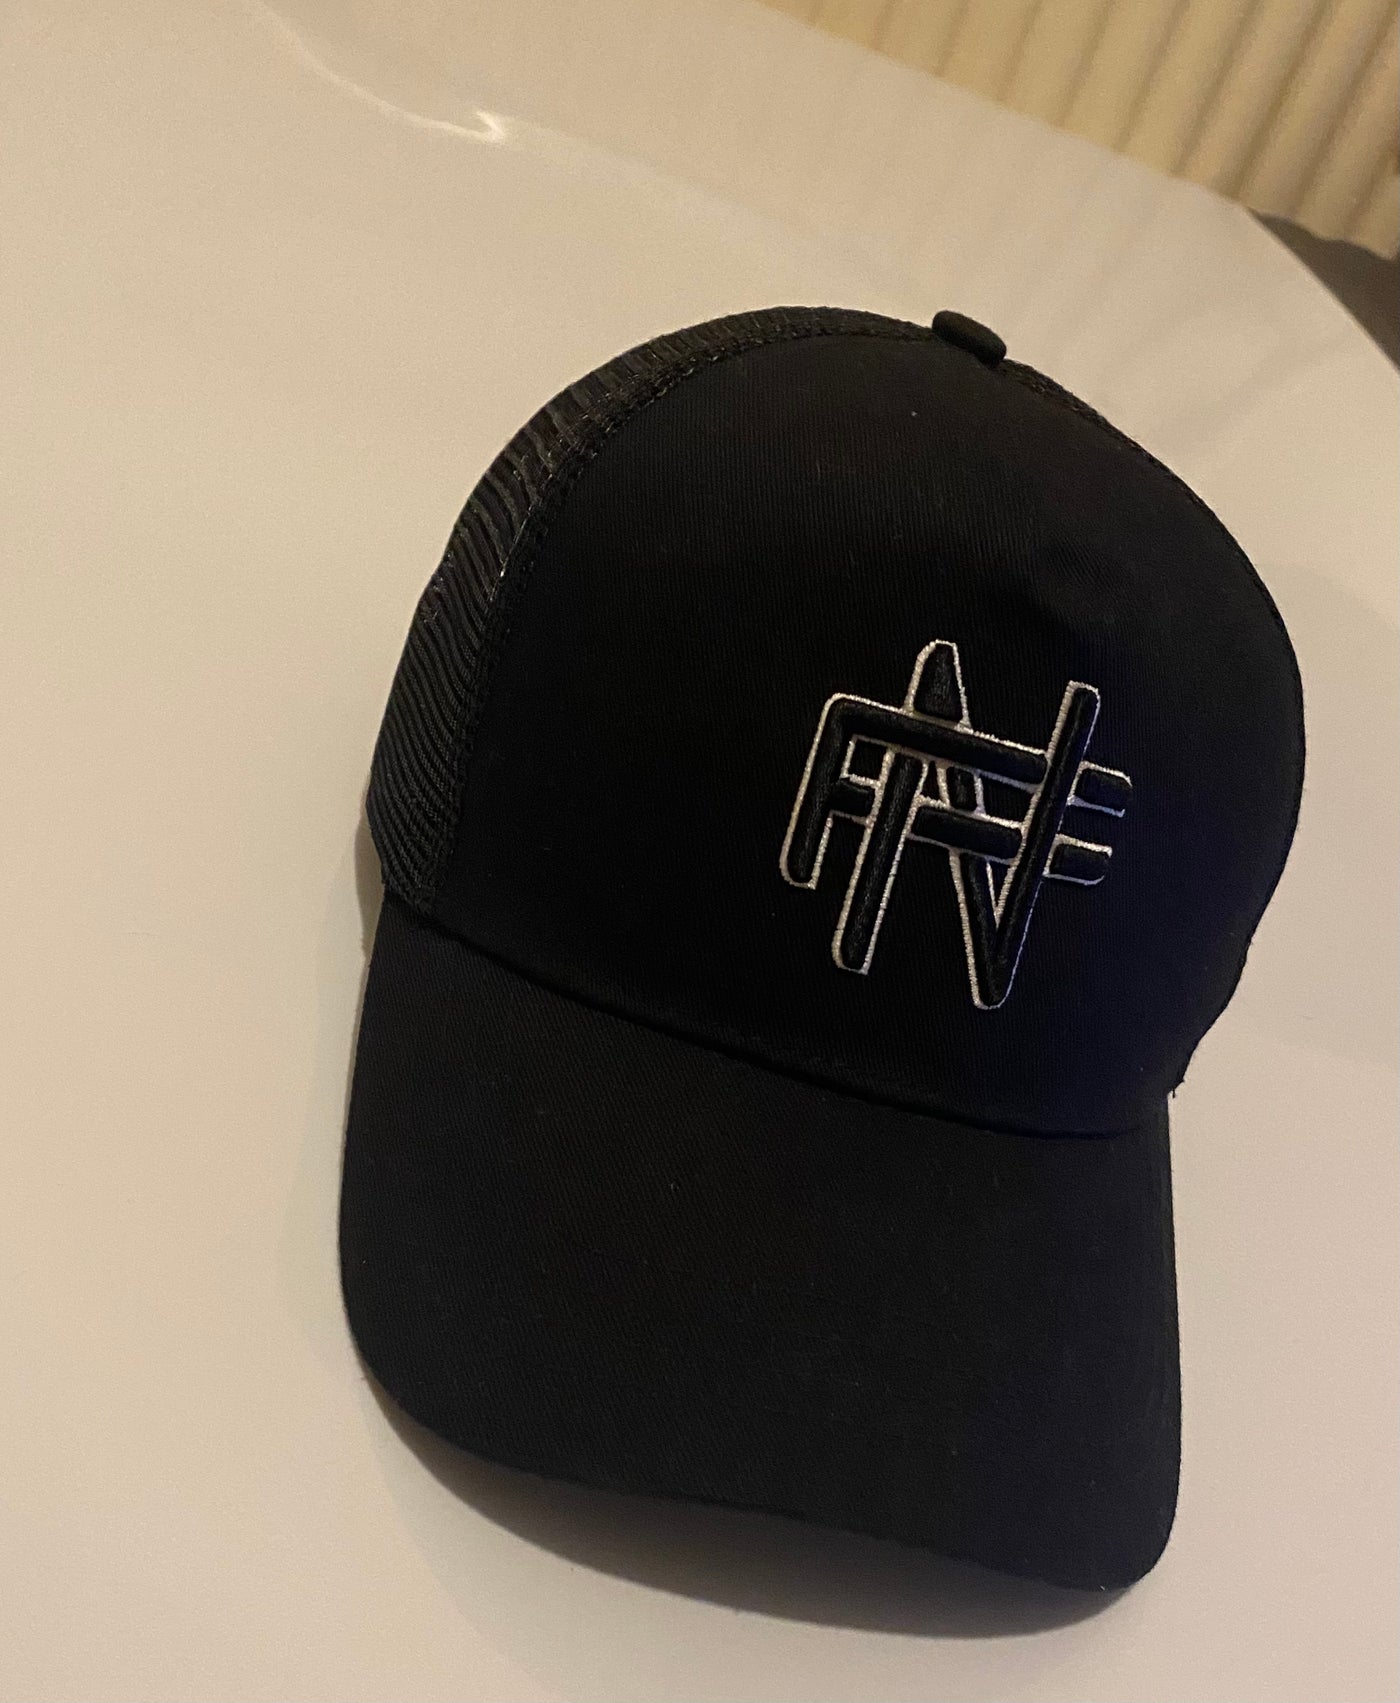 tracksuit sale | FN Cap Black & White | Sleek and Stylish Baseball Cap | FULANI